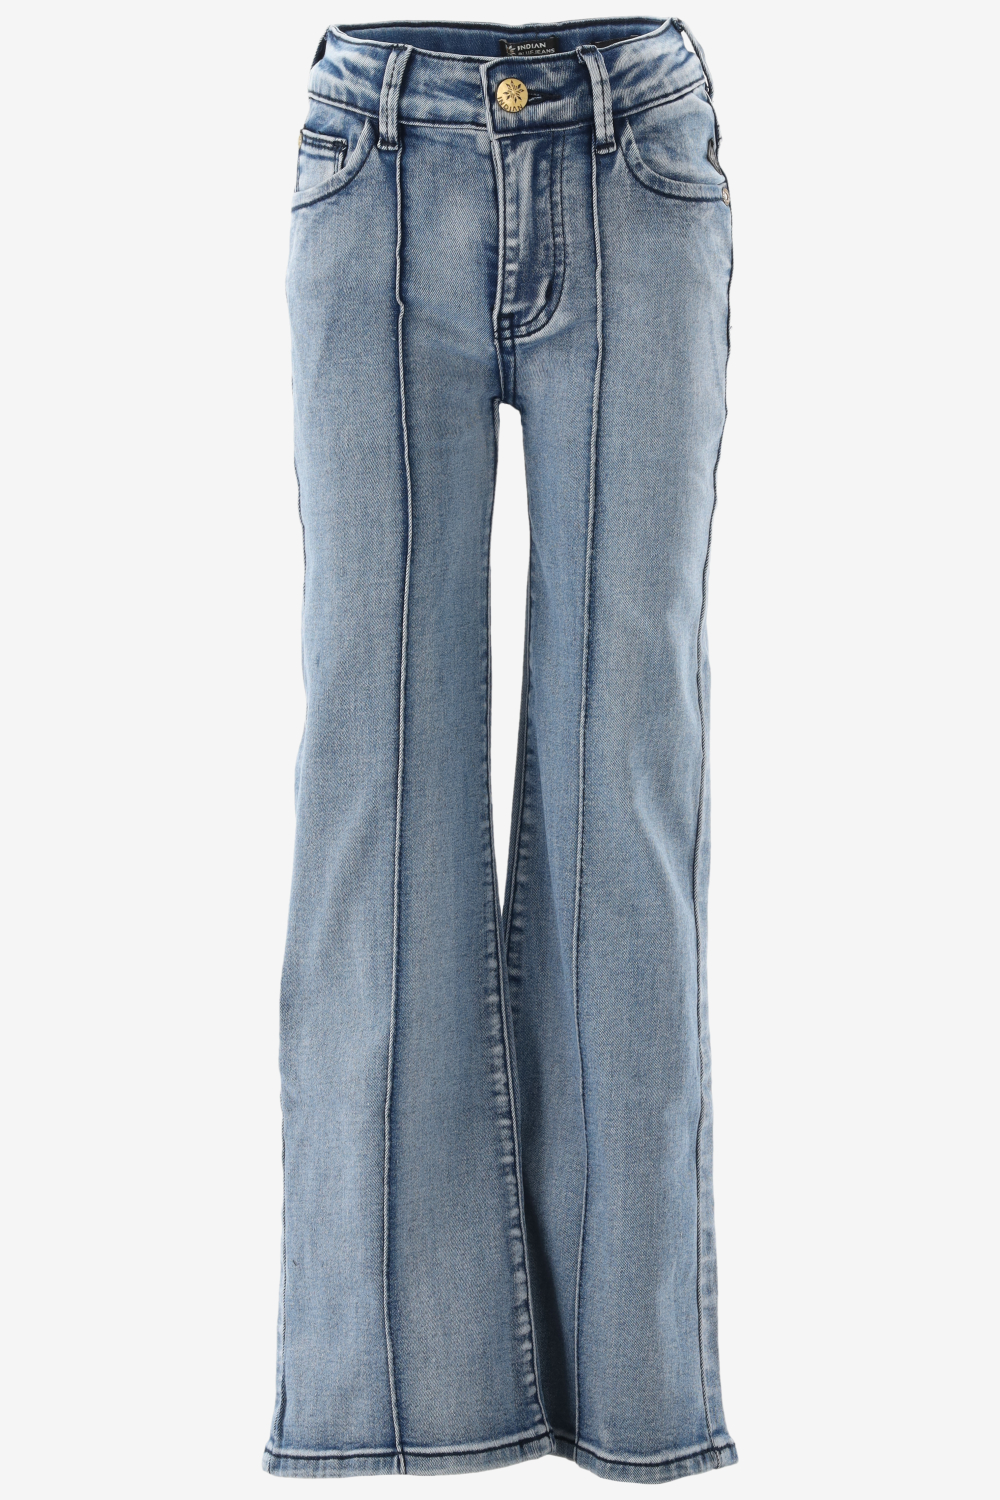 Indian Blue Jeans Lange broek meisje dark denim maat 140